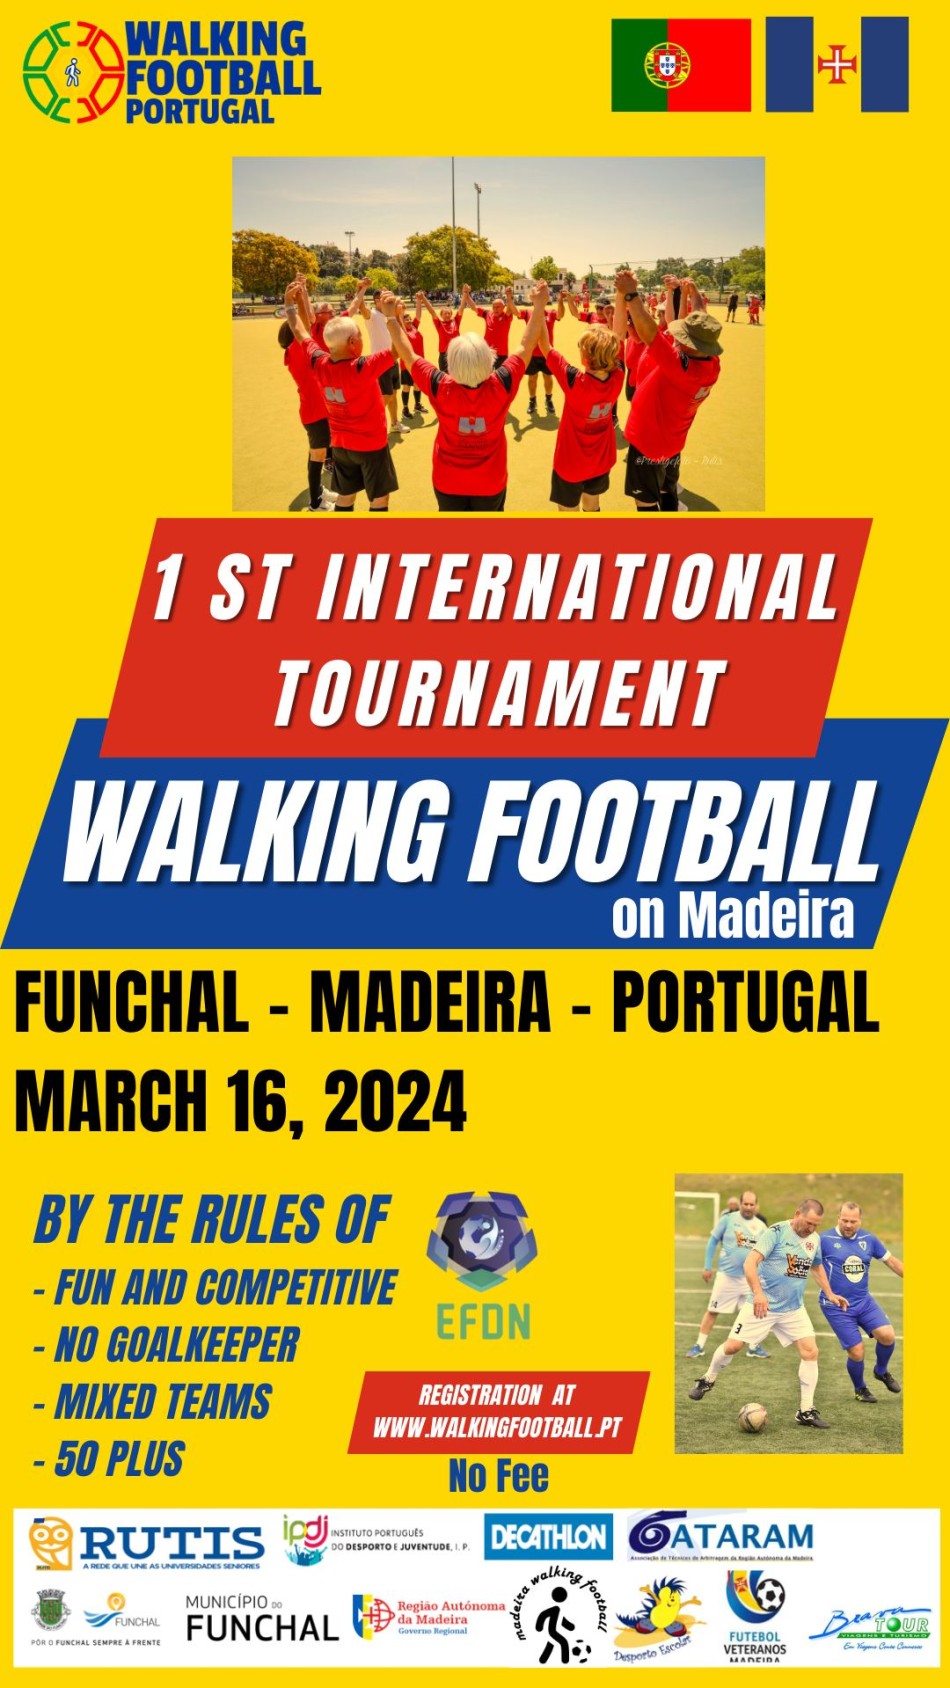 1st International Walking Football Tournament Portugal on the island of Madeira